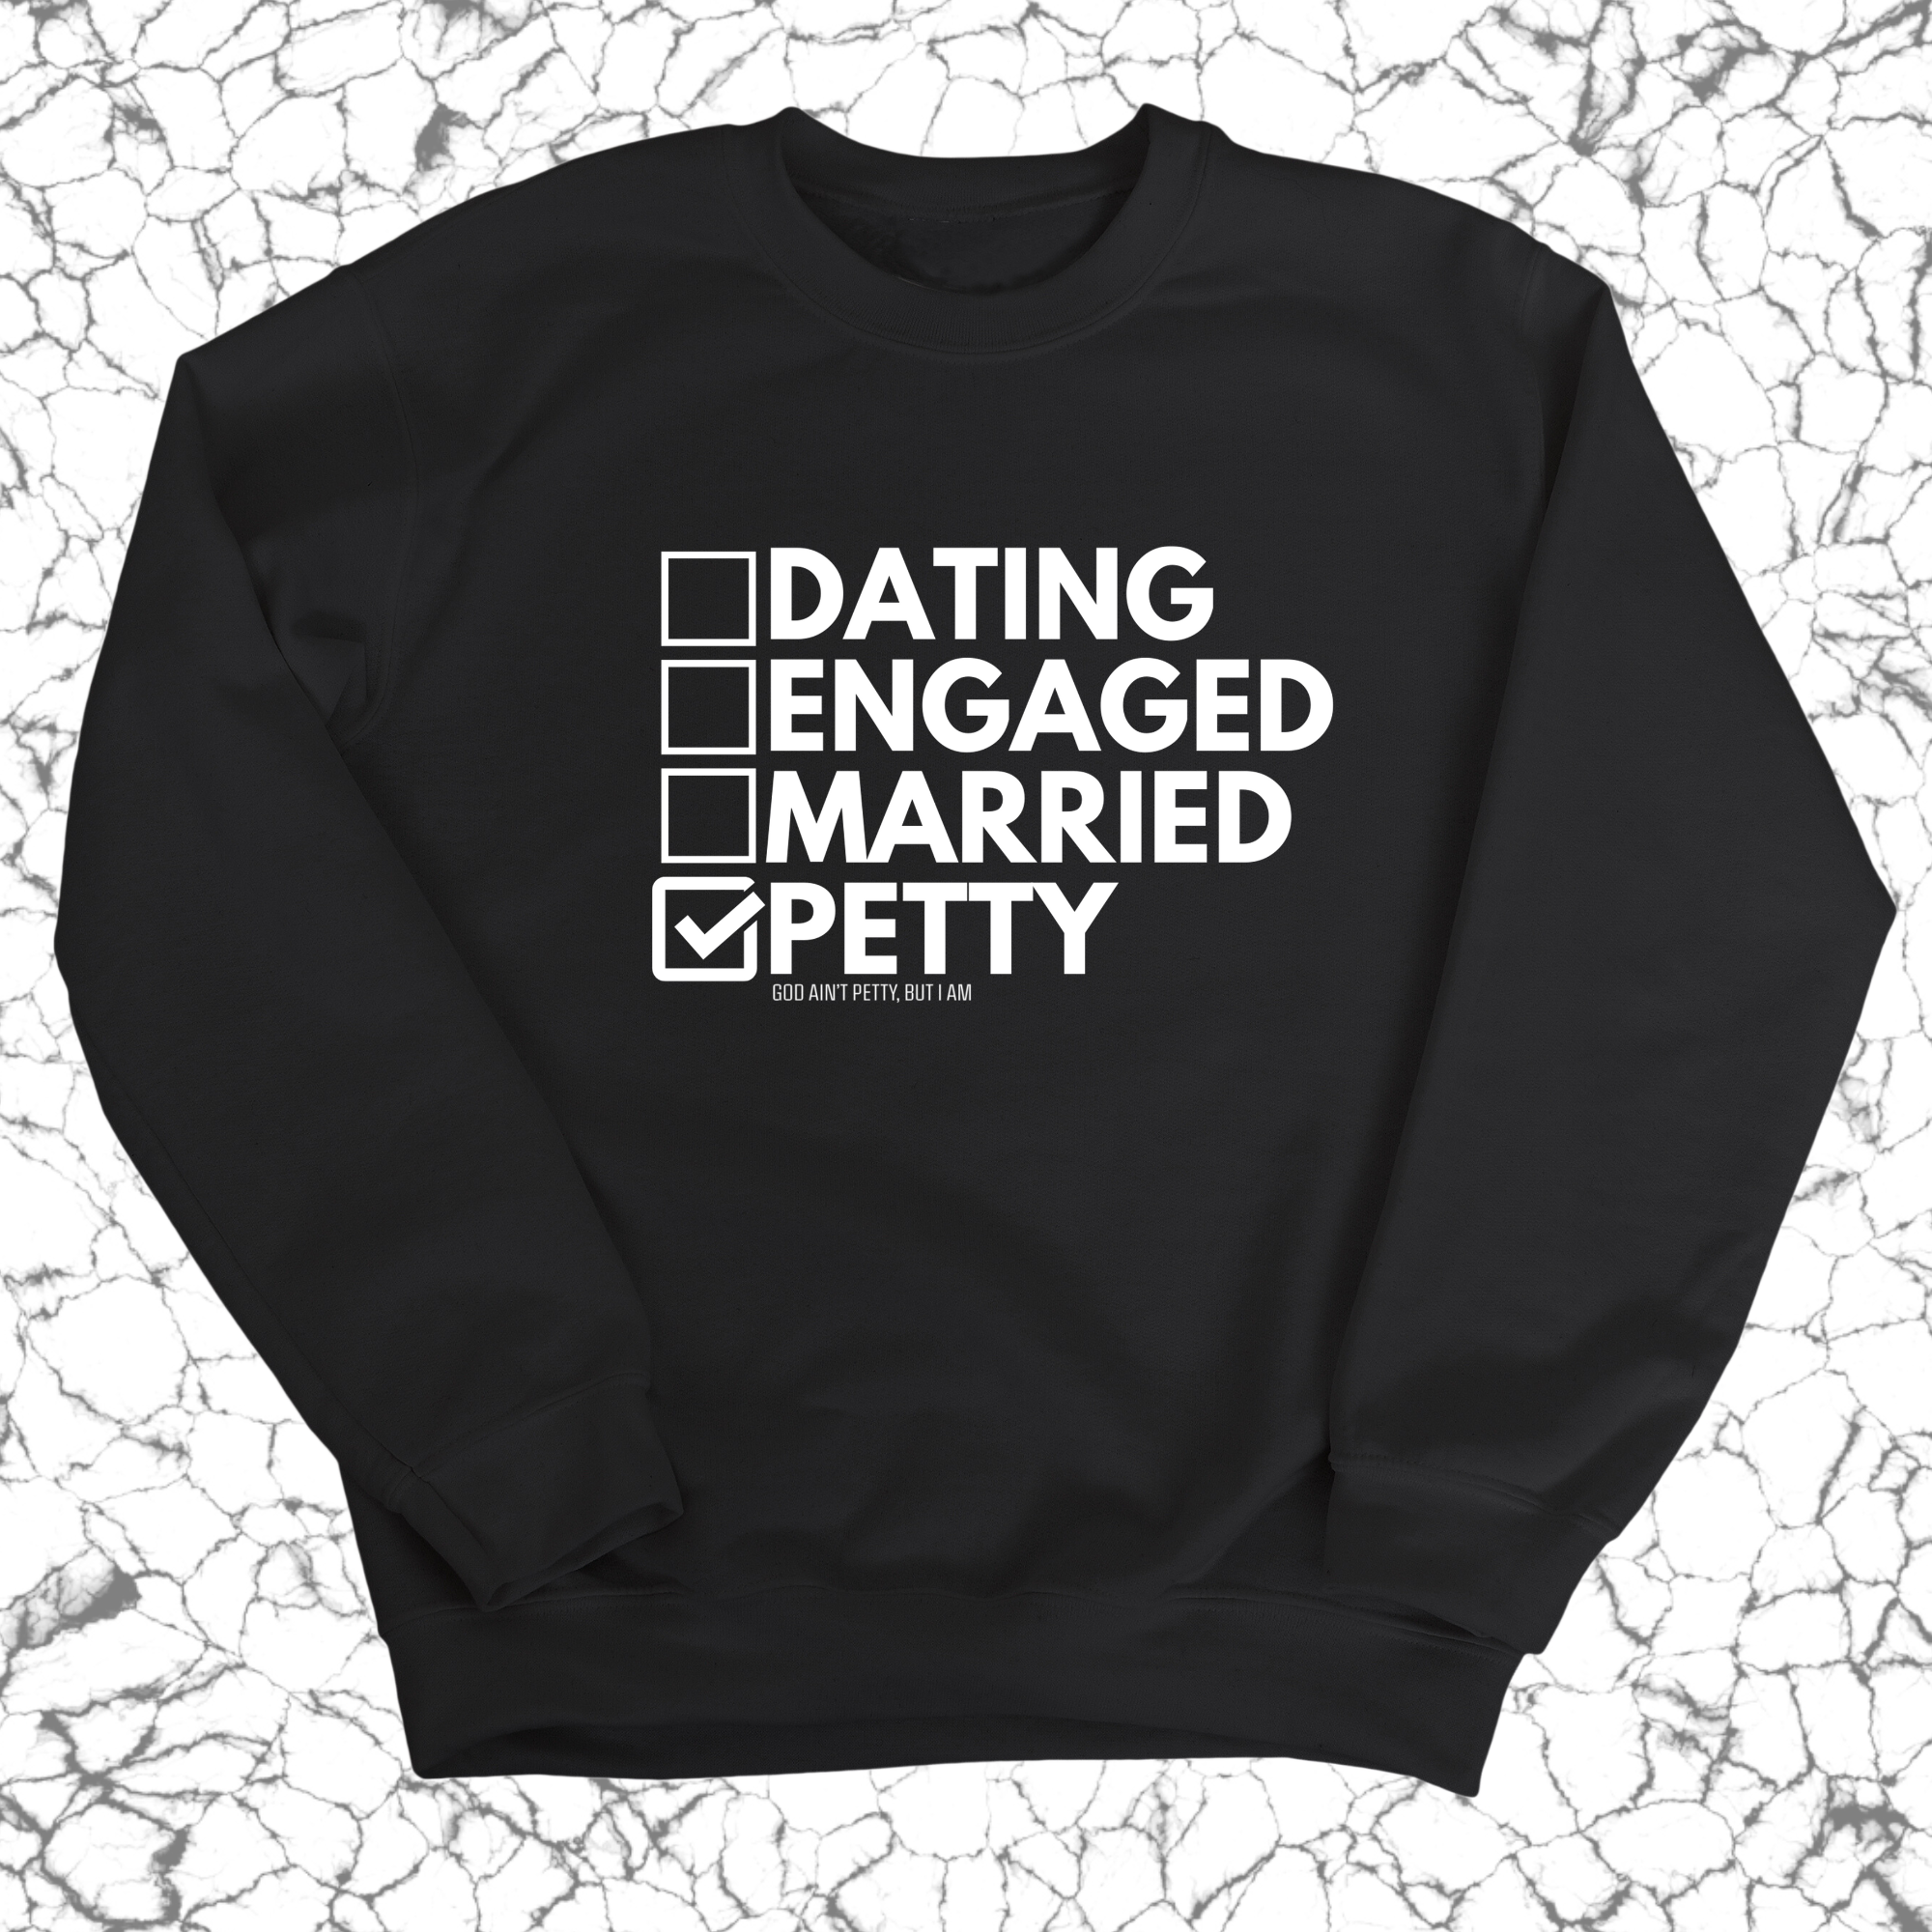 Petty: Not Dating, Engaged, or Married Unisex Sweatshirt-Sweatshirt-The Original God Ain't Petty But I Am